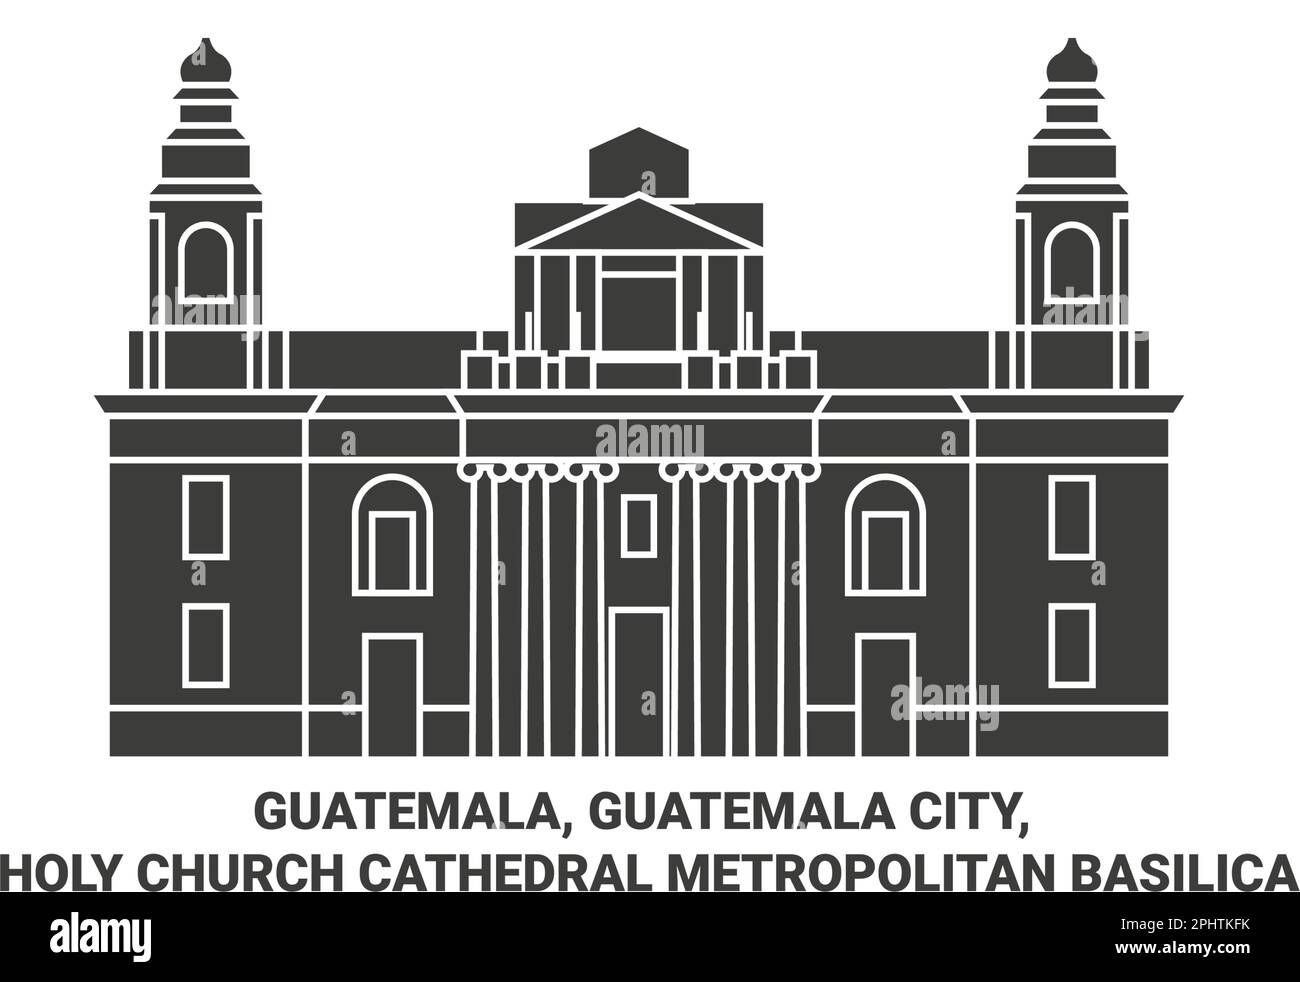 Guatemala, Guatemala City, Holy Church Cathedral Metropolitan Basilica travel landmark vector illustration Stock Vector